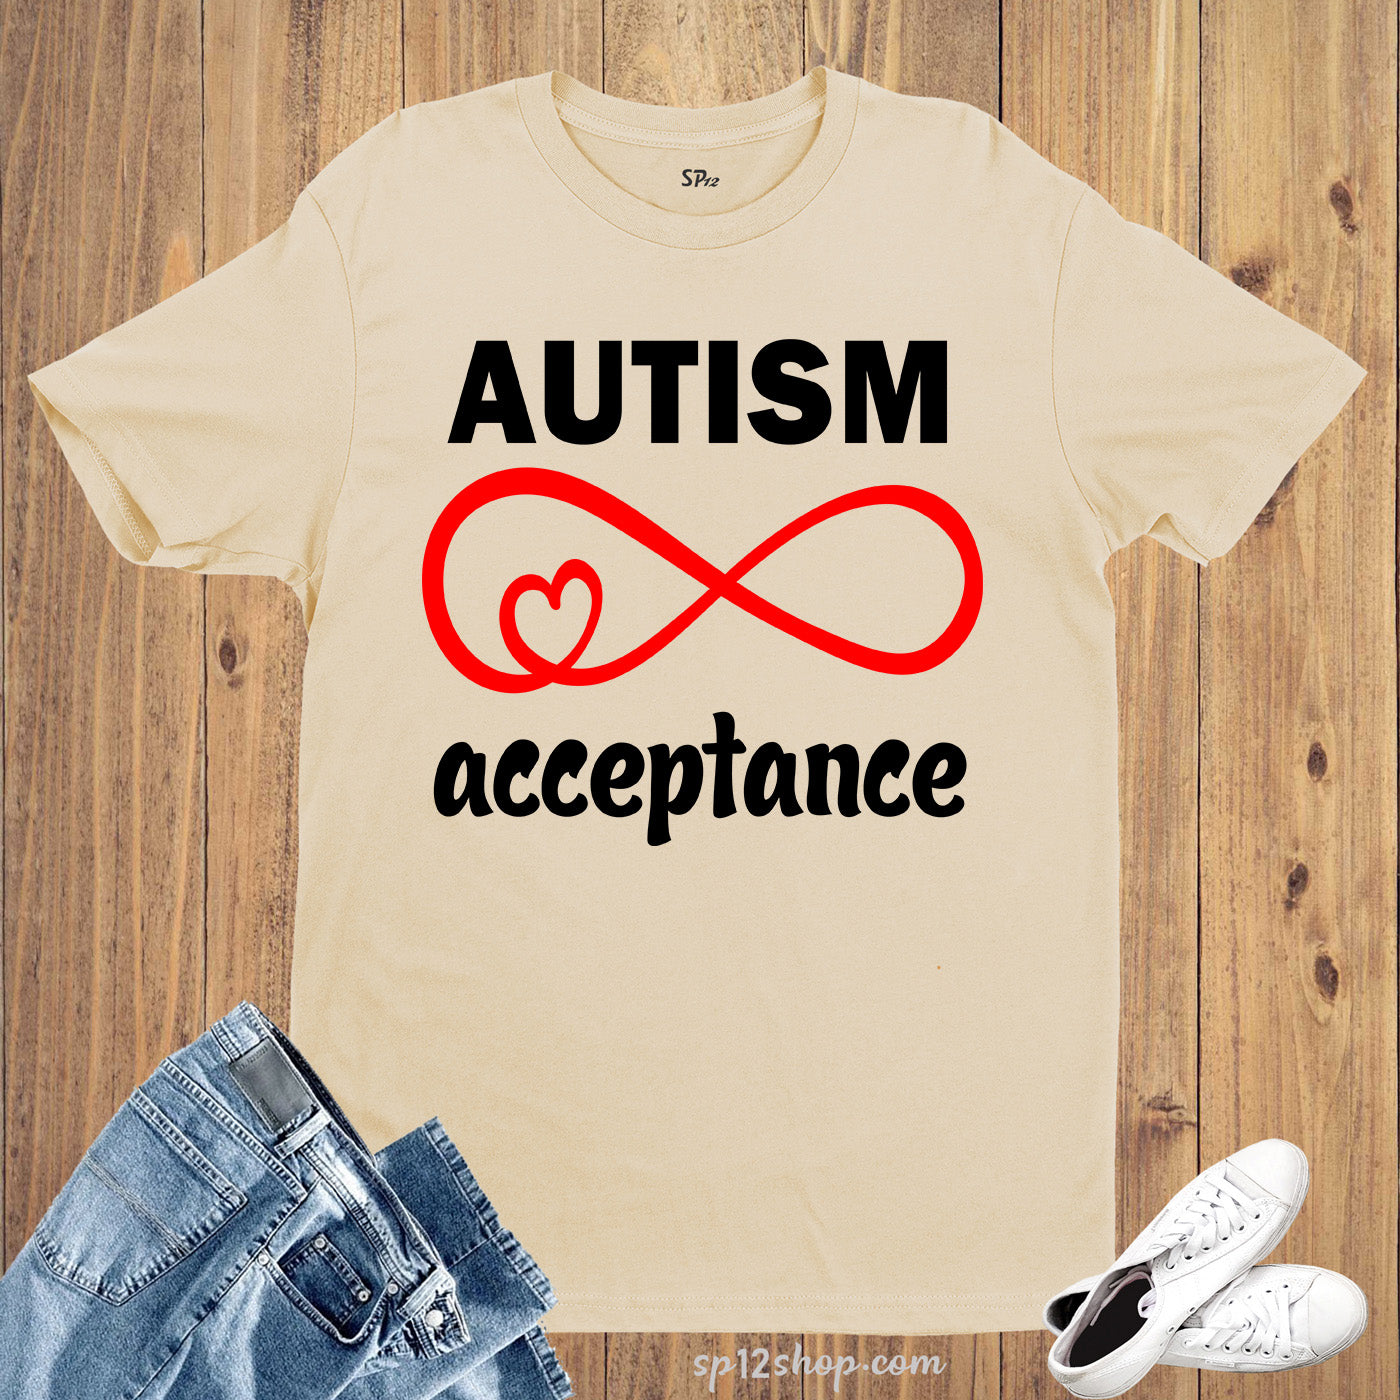 Autism Acceptance T-Shirt Awareness Gift Tees